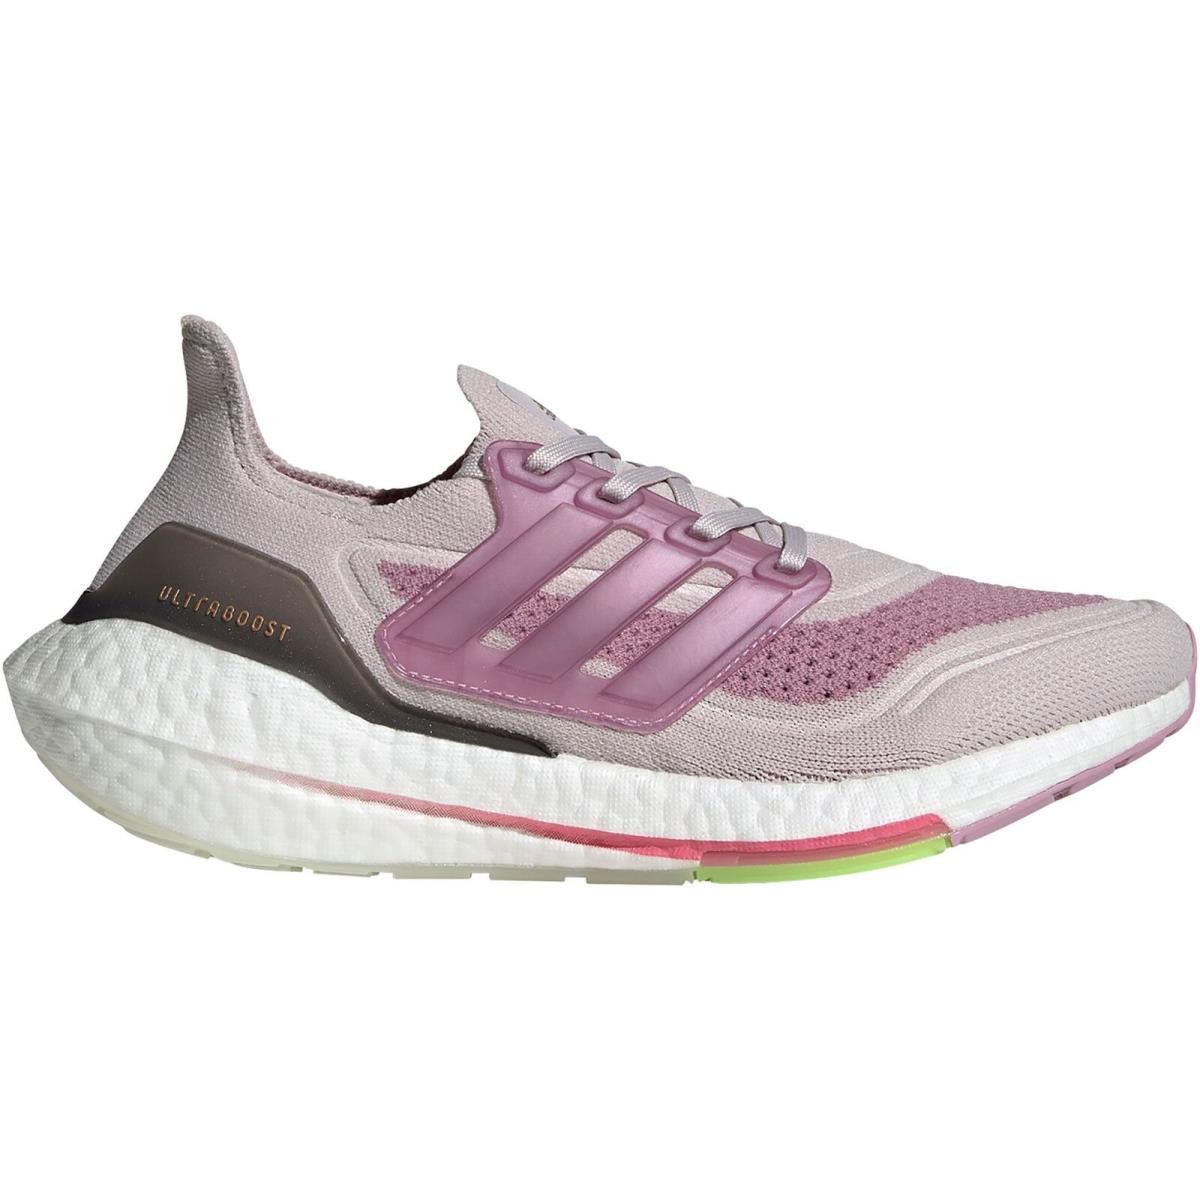 Adidas Ultraboost 21 Purple Pink Size 6.0 S23831 Women s Shoes